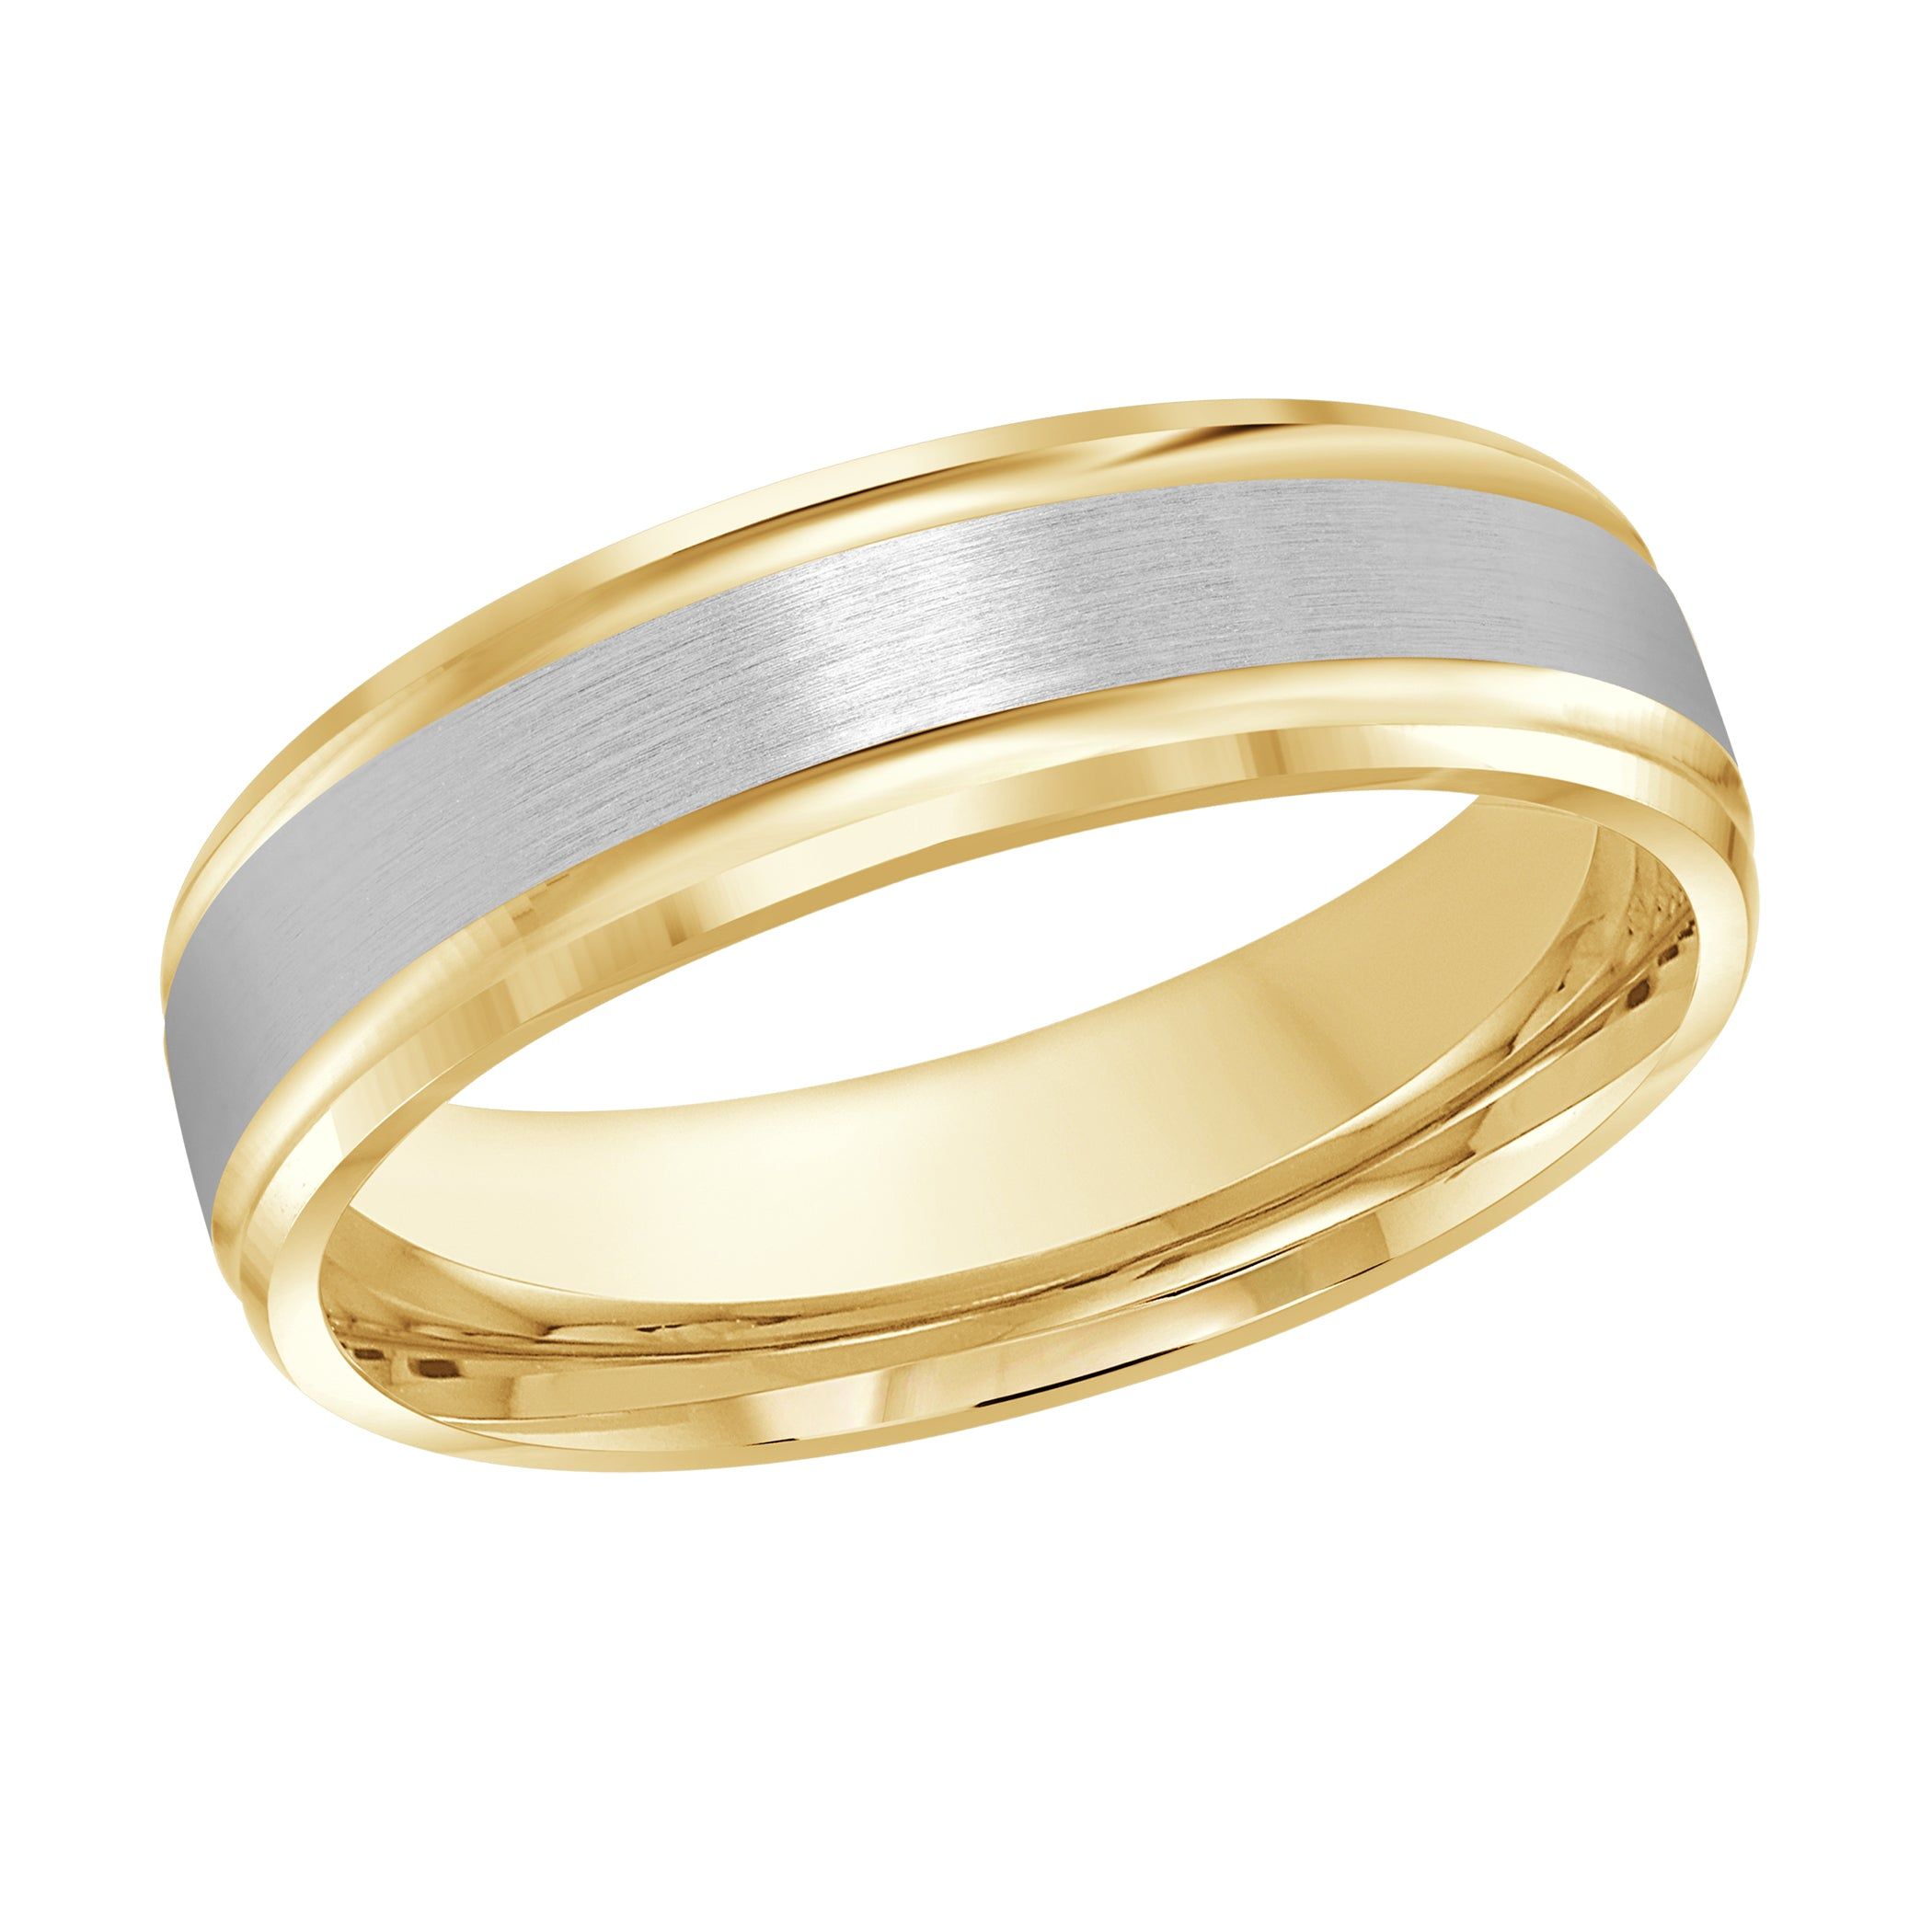 Men's 6mm Two-tone Satin-finish Beveled Edge Wedding Ring